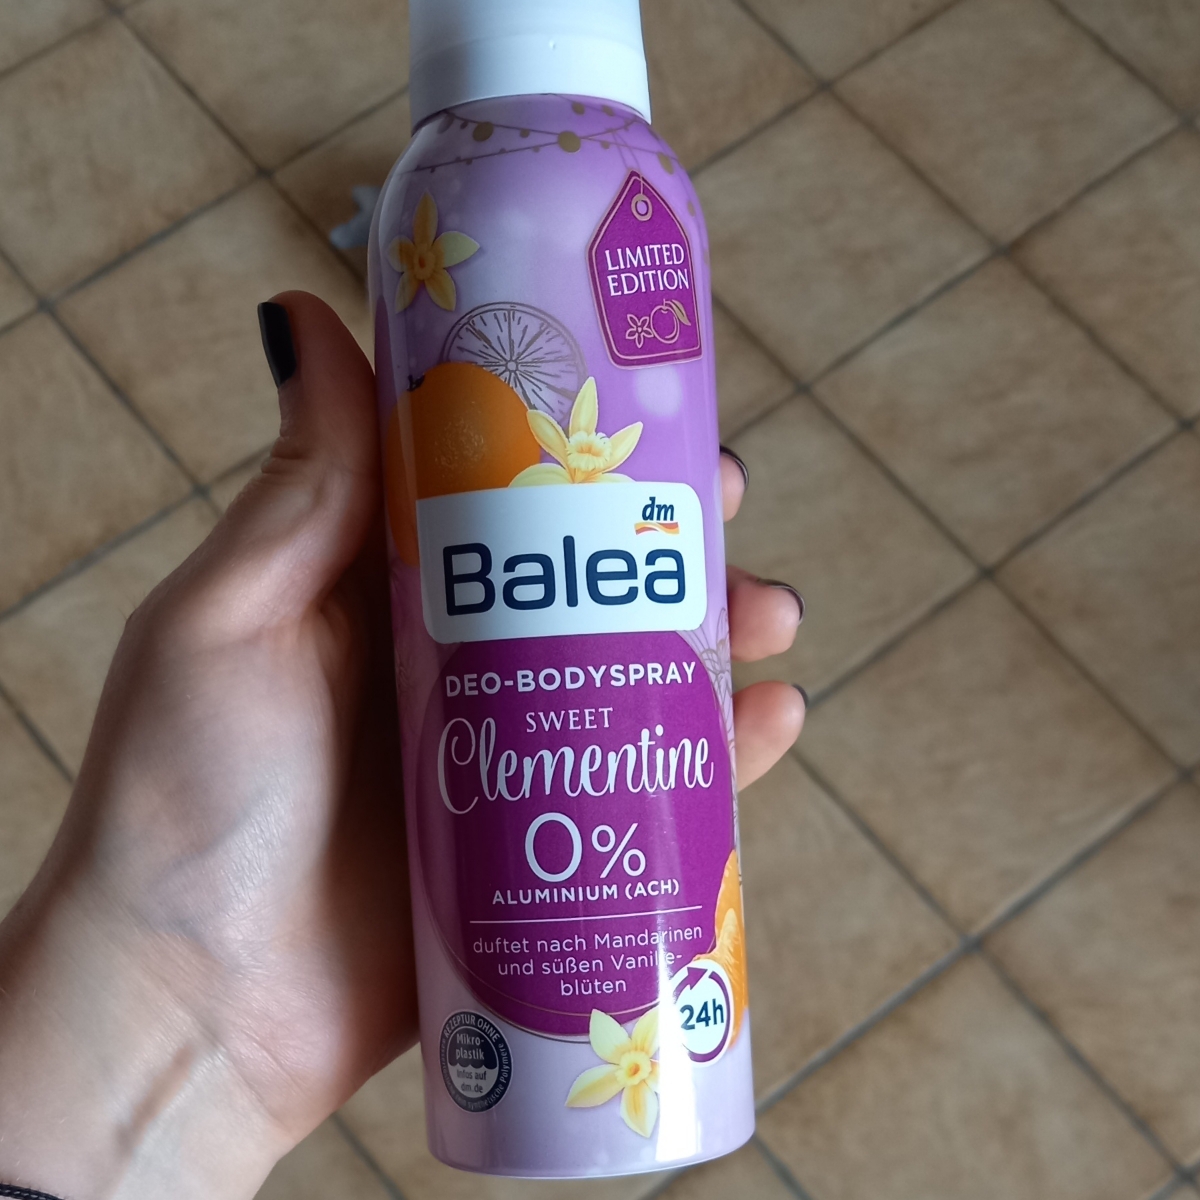 Balea Deo Bodyspray Sweet Clementine Reviews | abillion